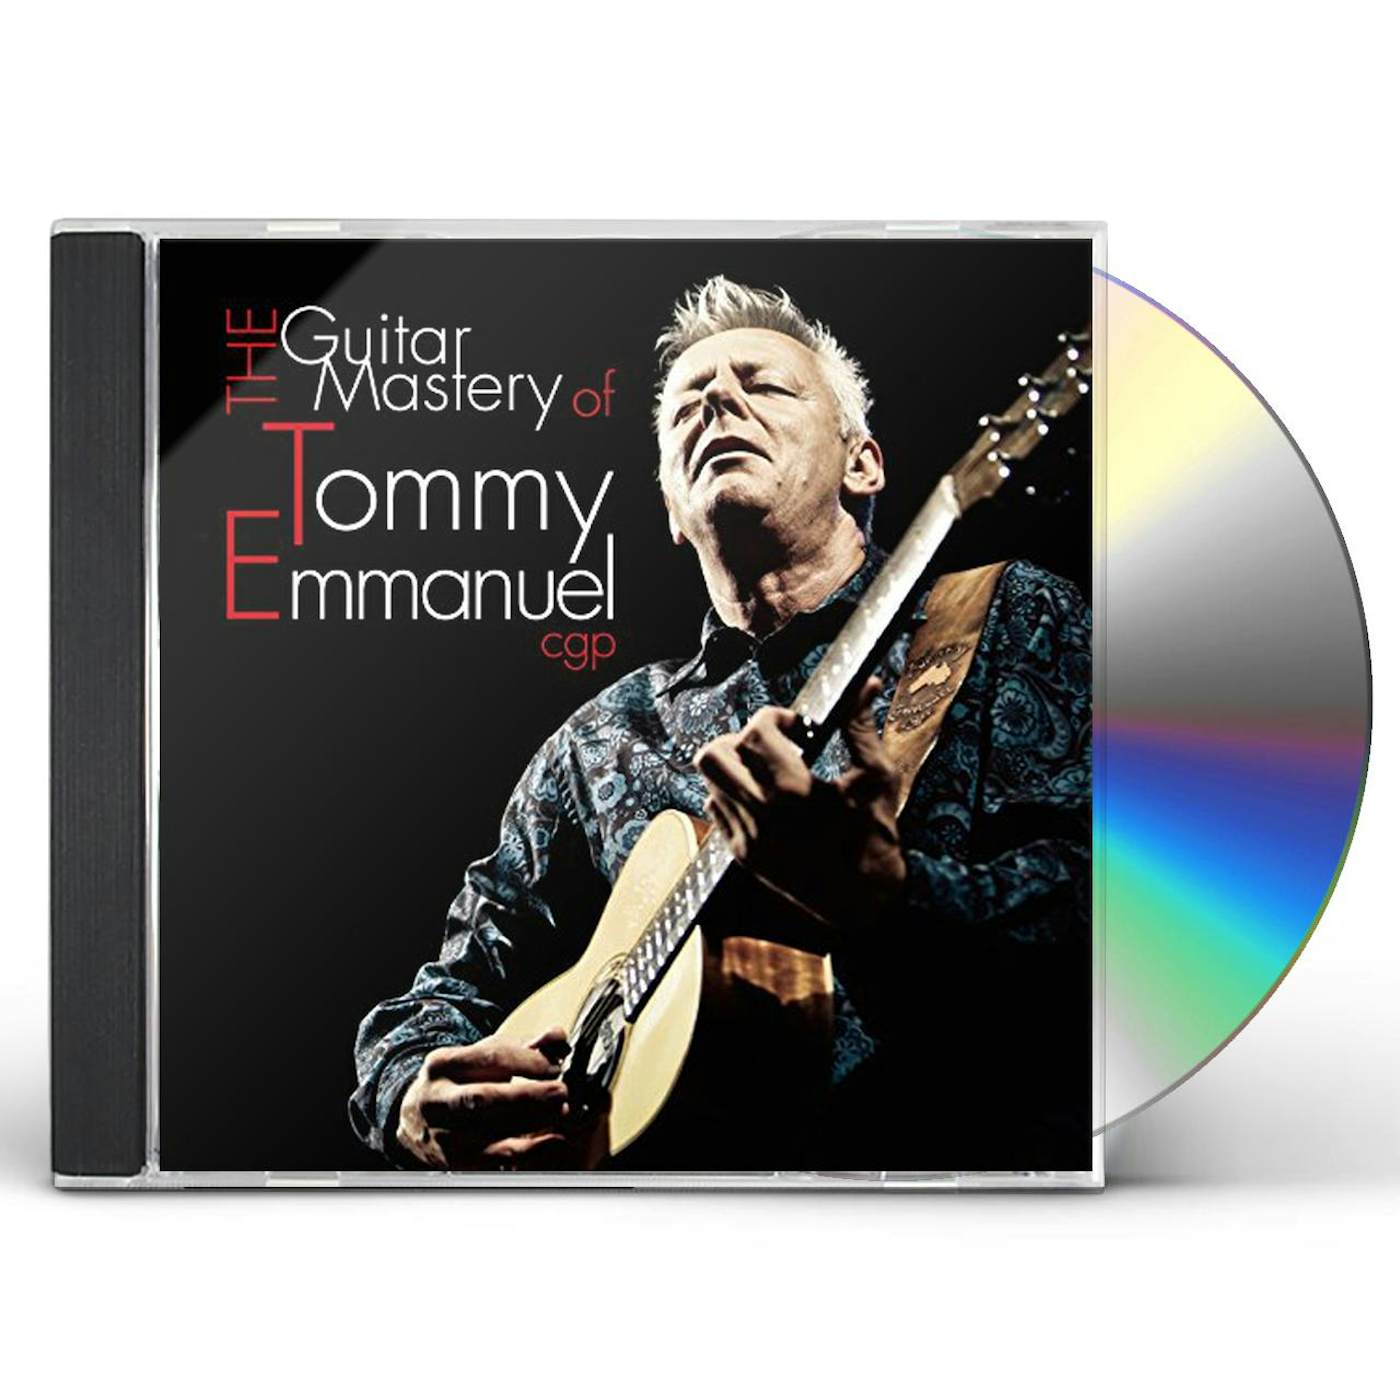 GUITAR MASTERY OF TOMMY EMMANUEL CD